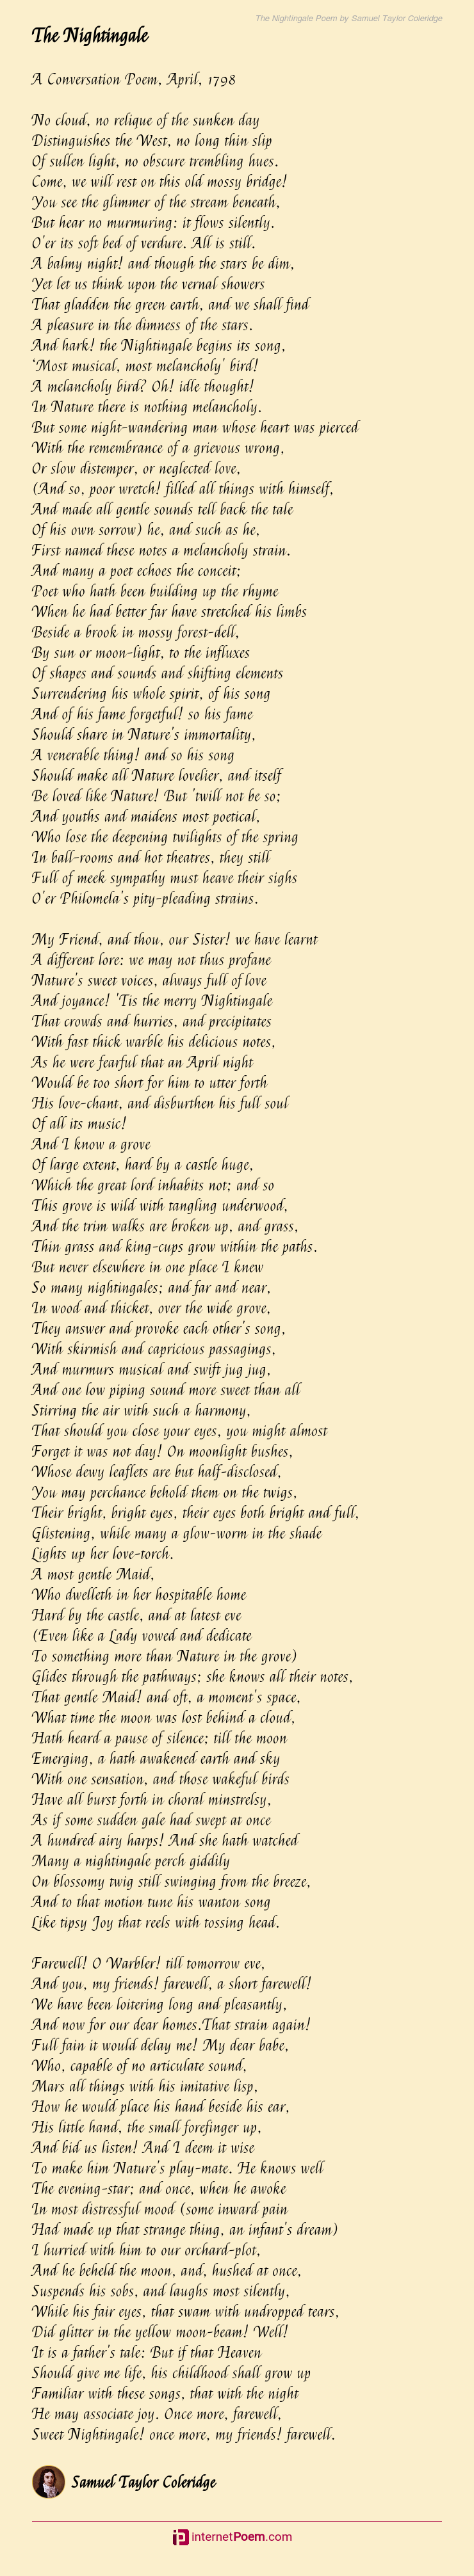 short poems by samuel taylor coleridge